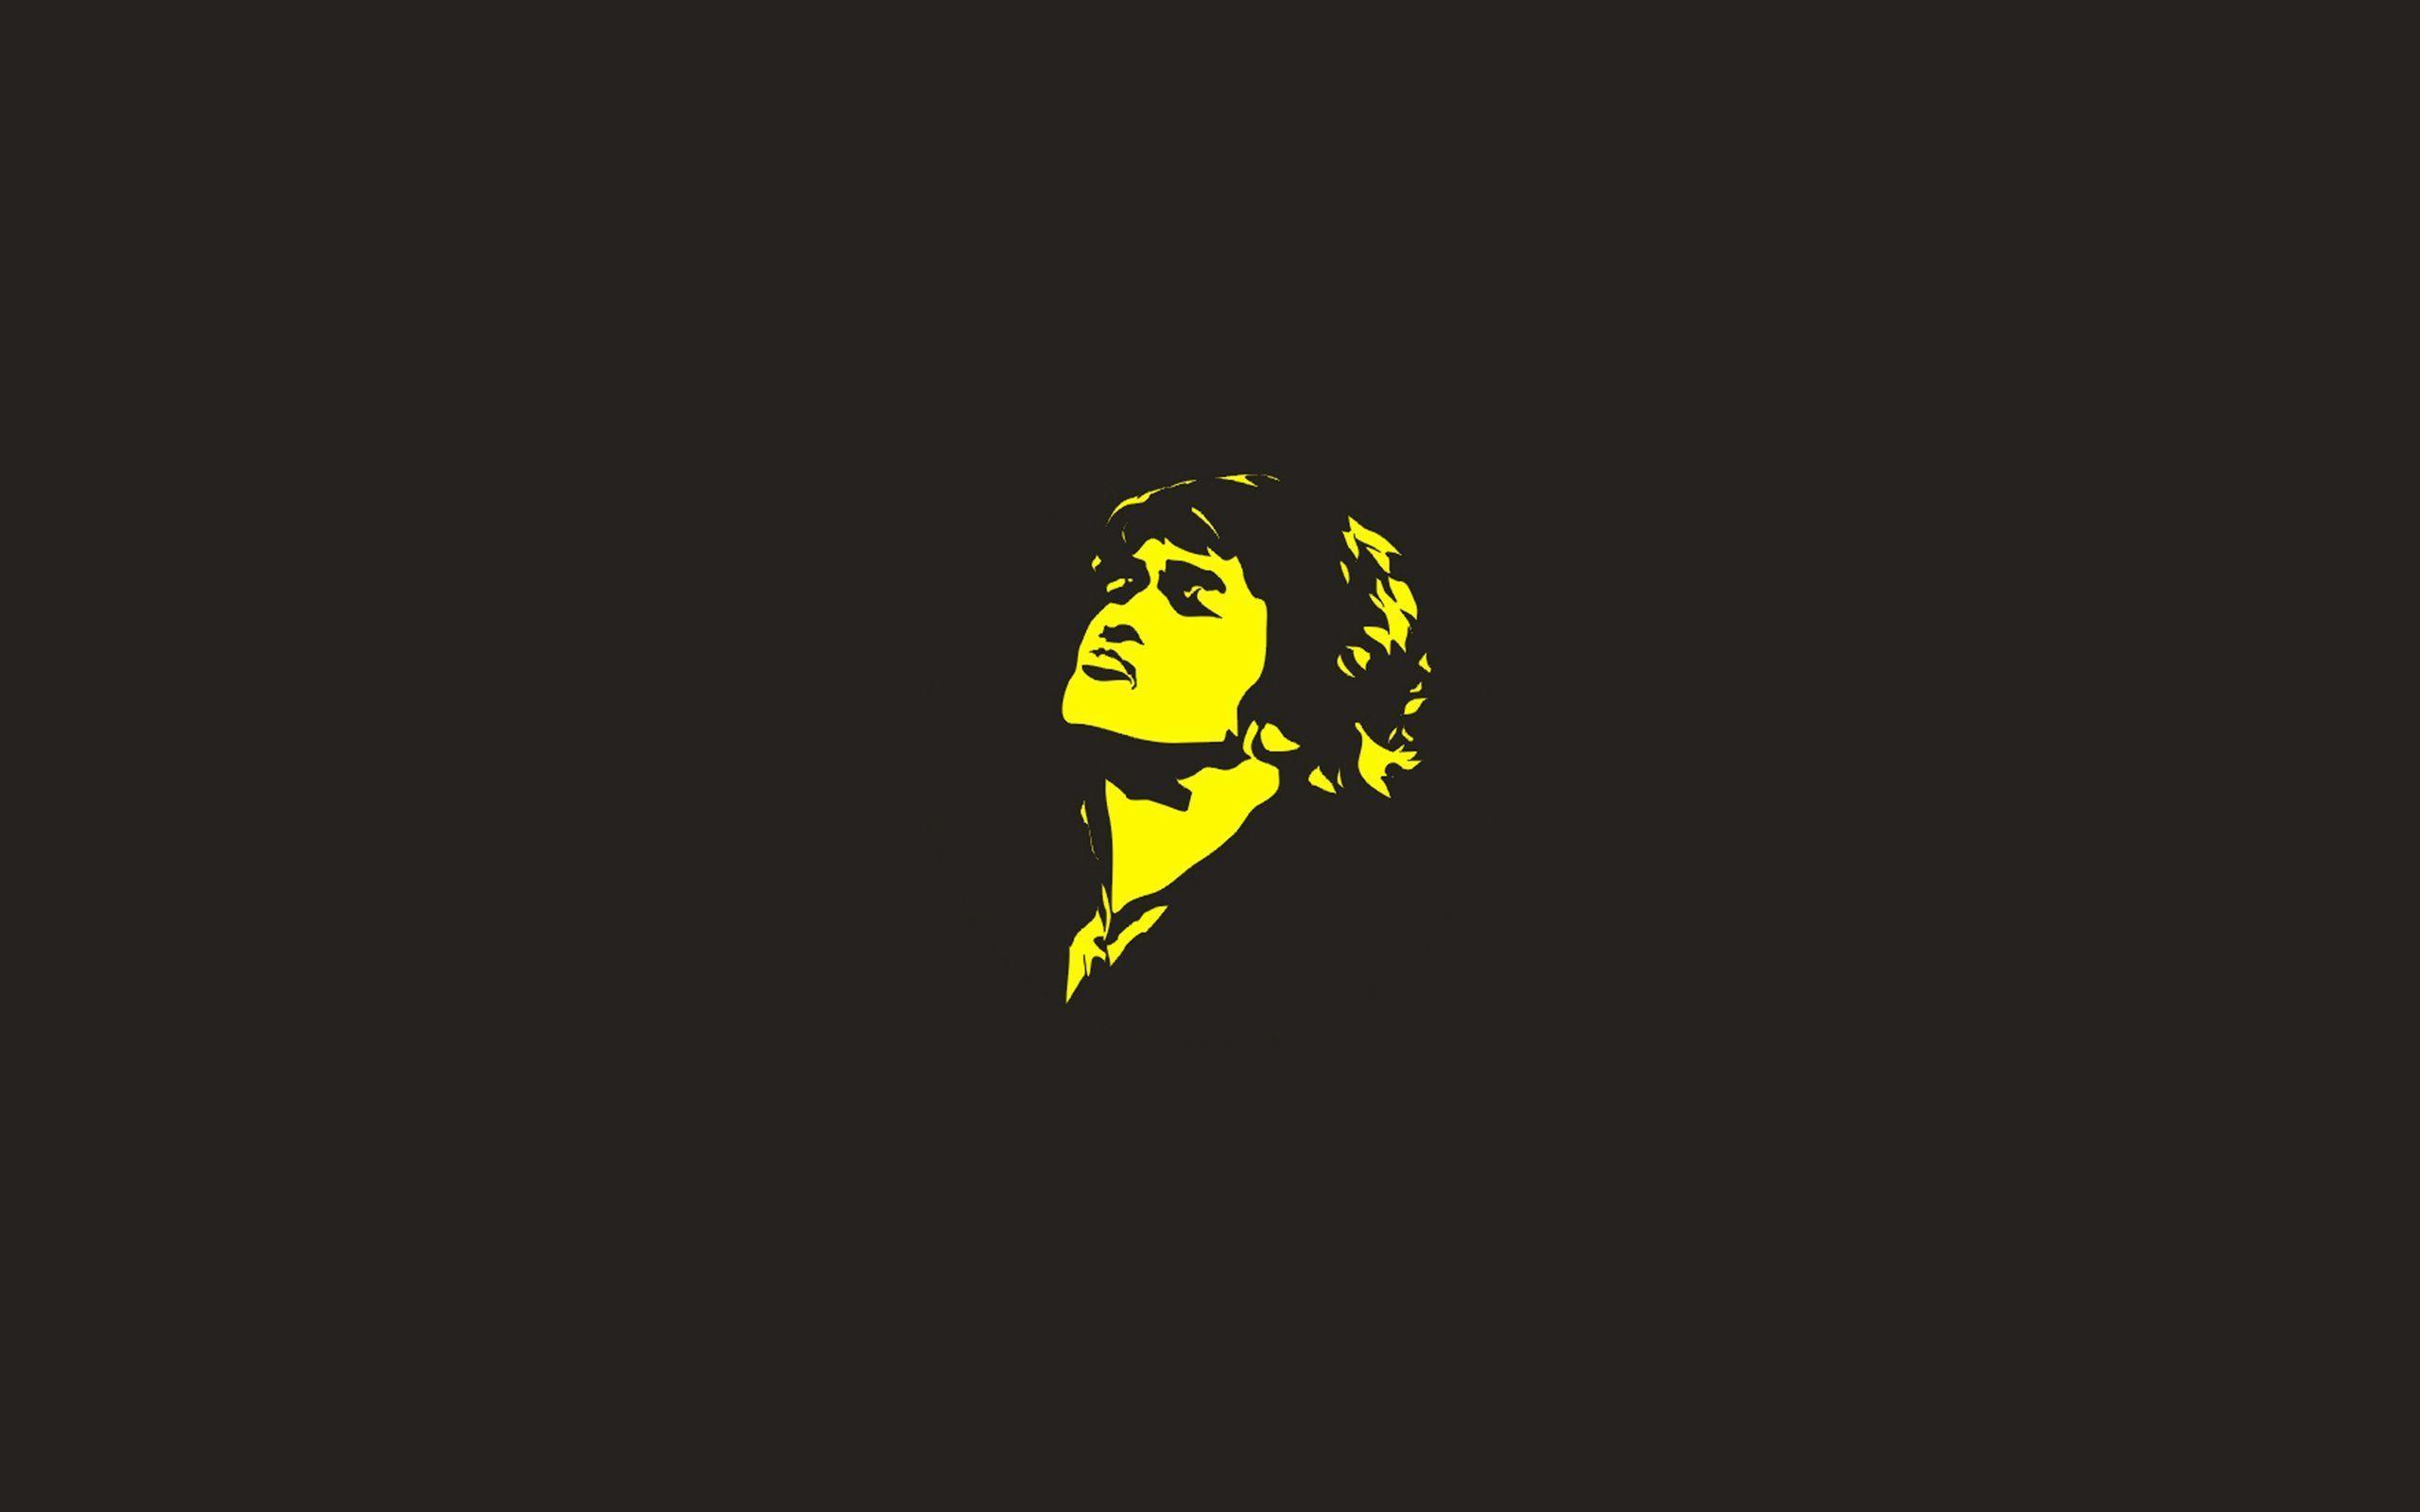 Maradona wallpapers – wallpapers free download